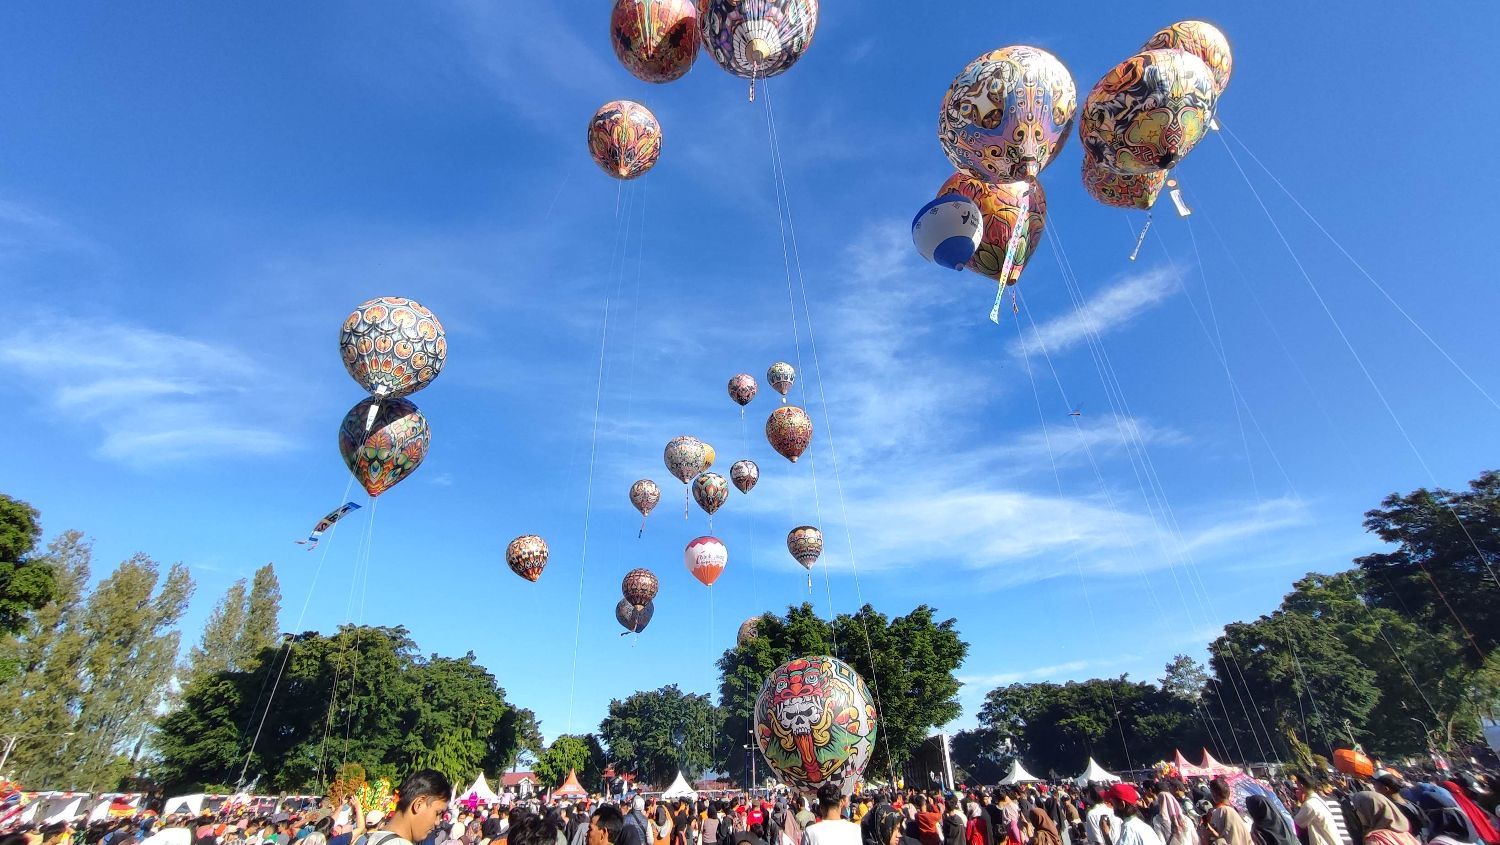 Festival Balon Udara Tradisional yang kerap diselenggarakan di Wonosobo dan telah menjadi tradisi. Bagaimana sejarahnya?